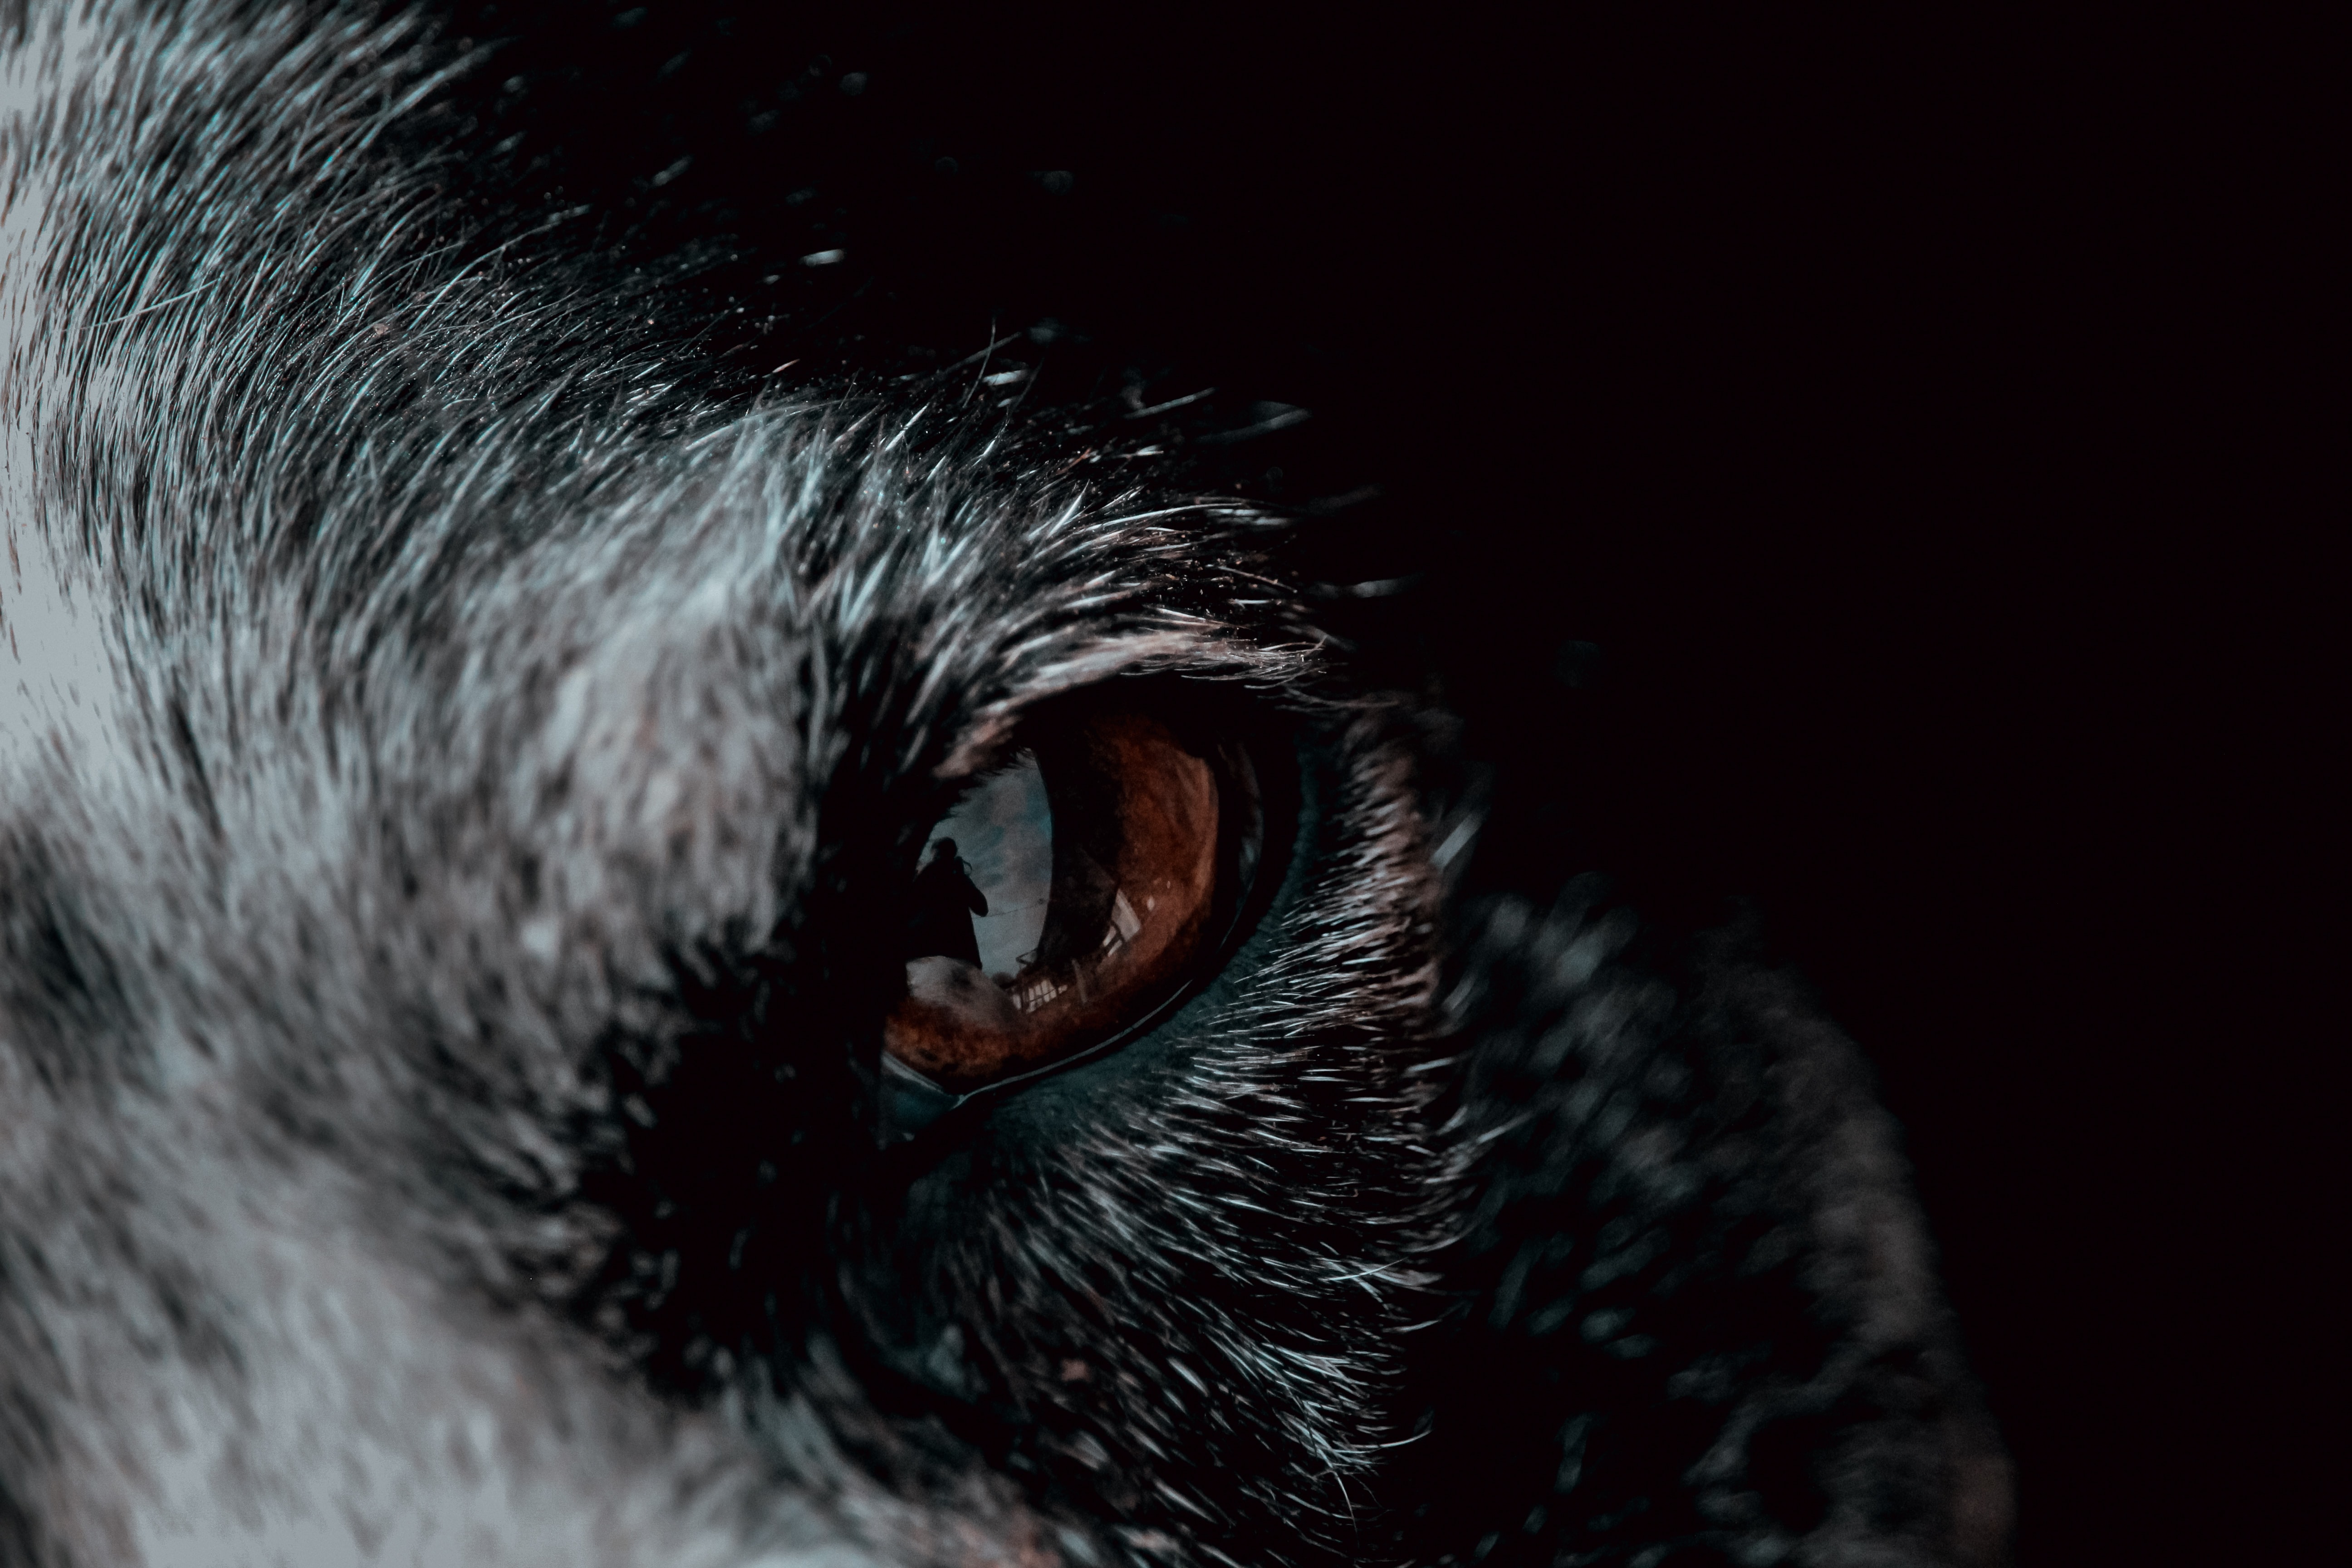 dog's eye up close